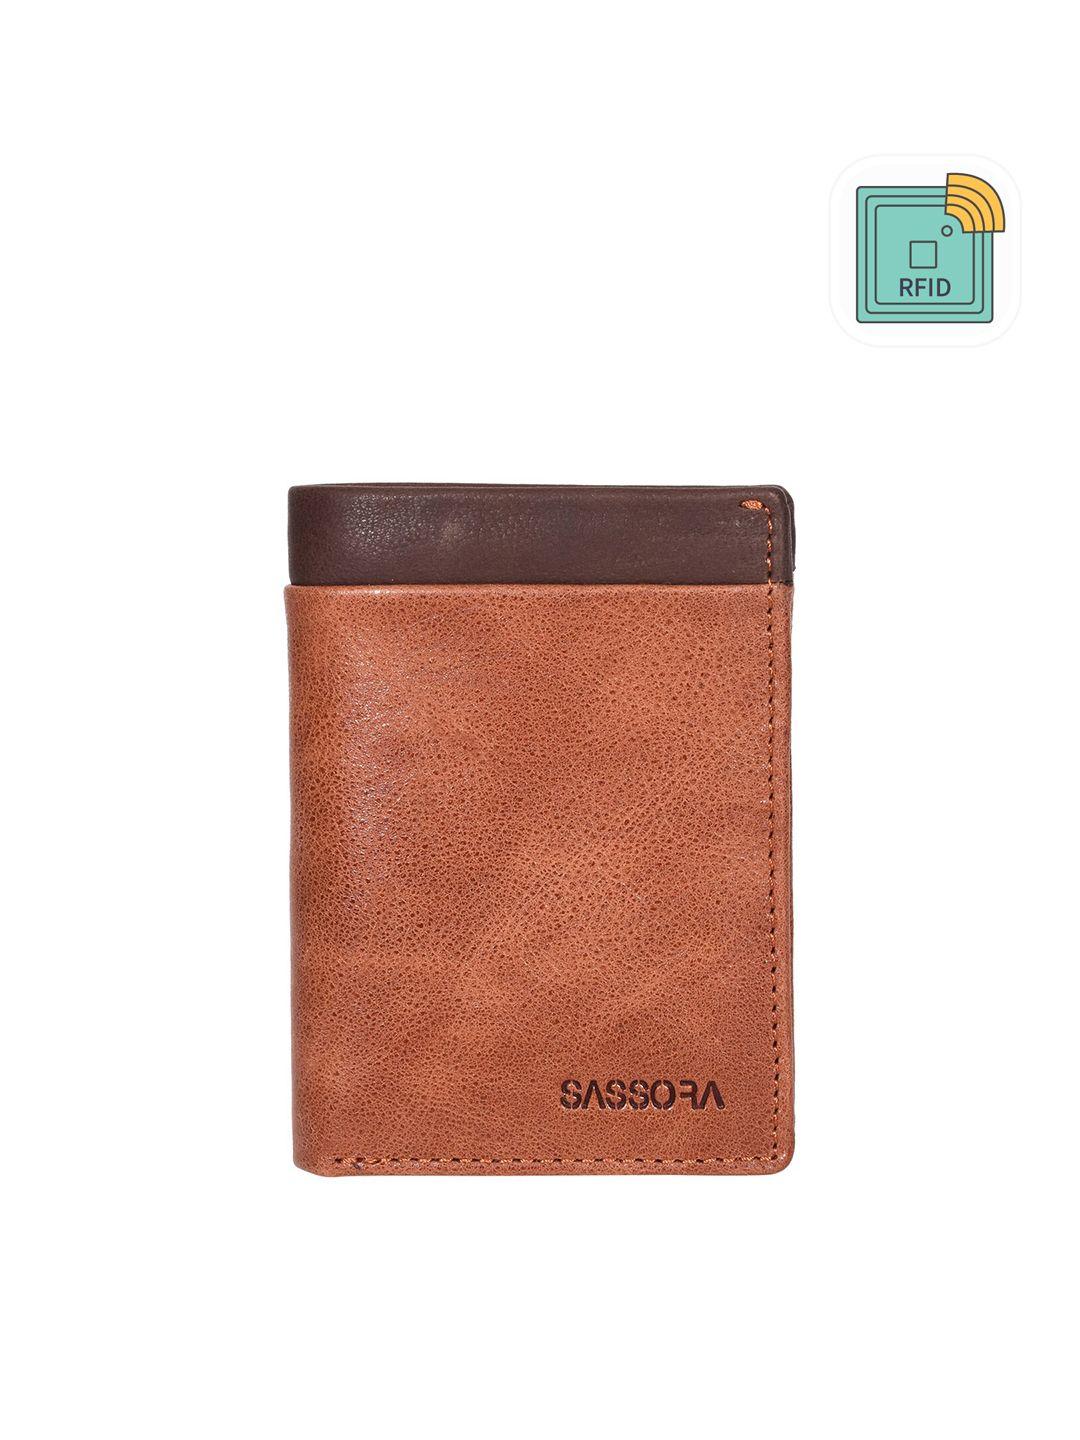 sassora rfid leather two fold wallet